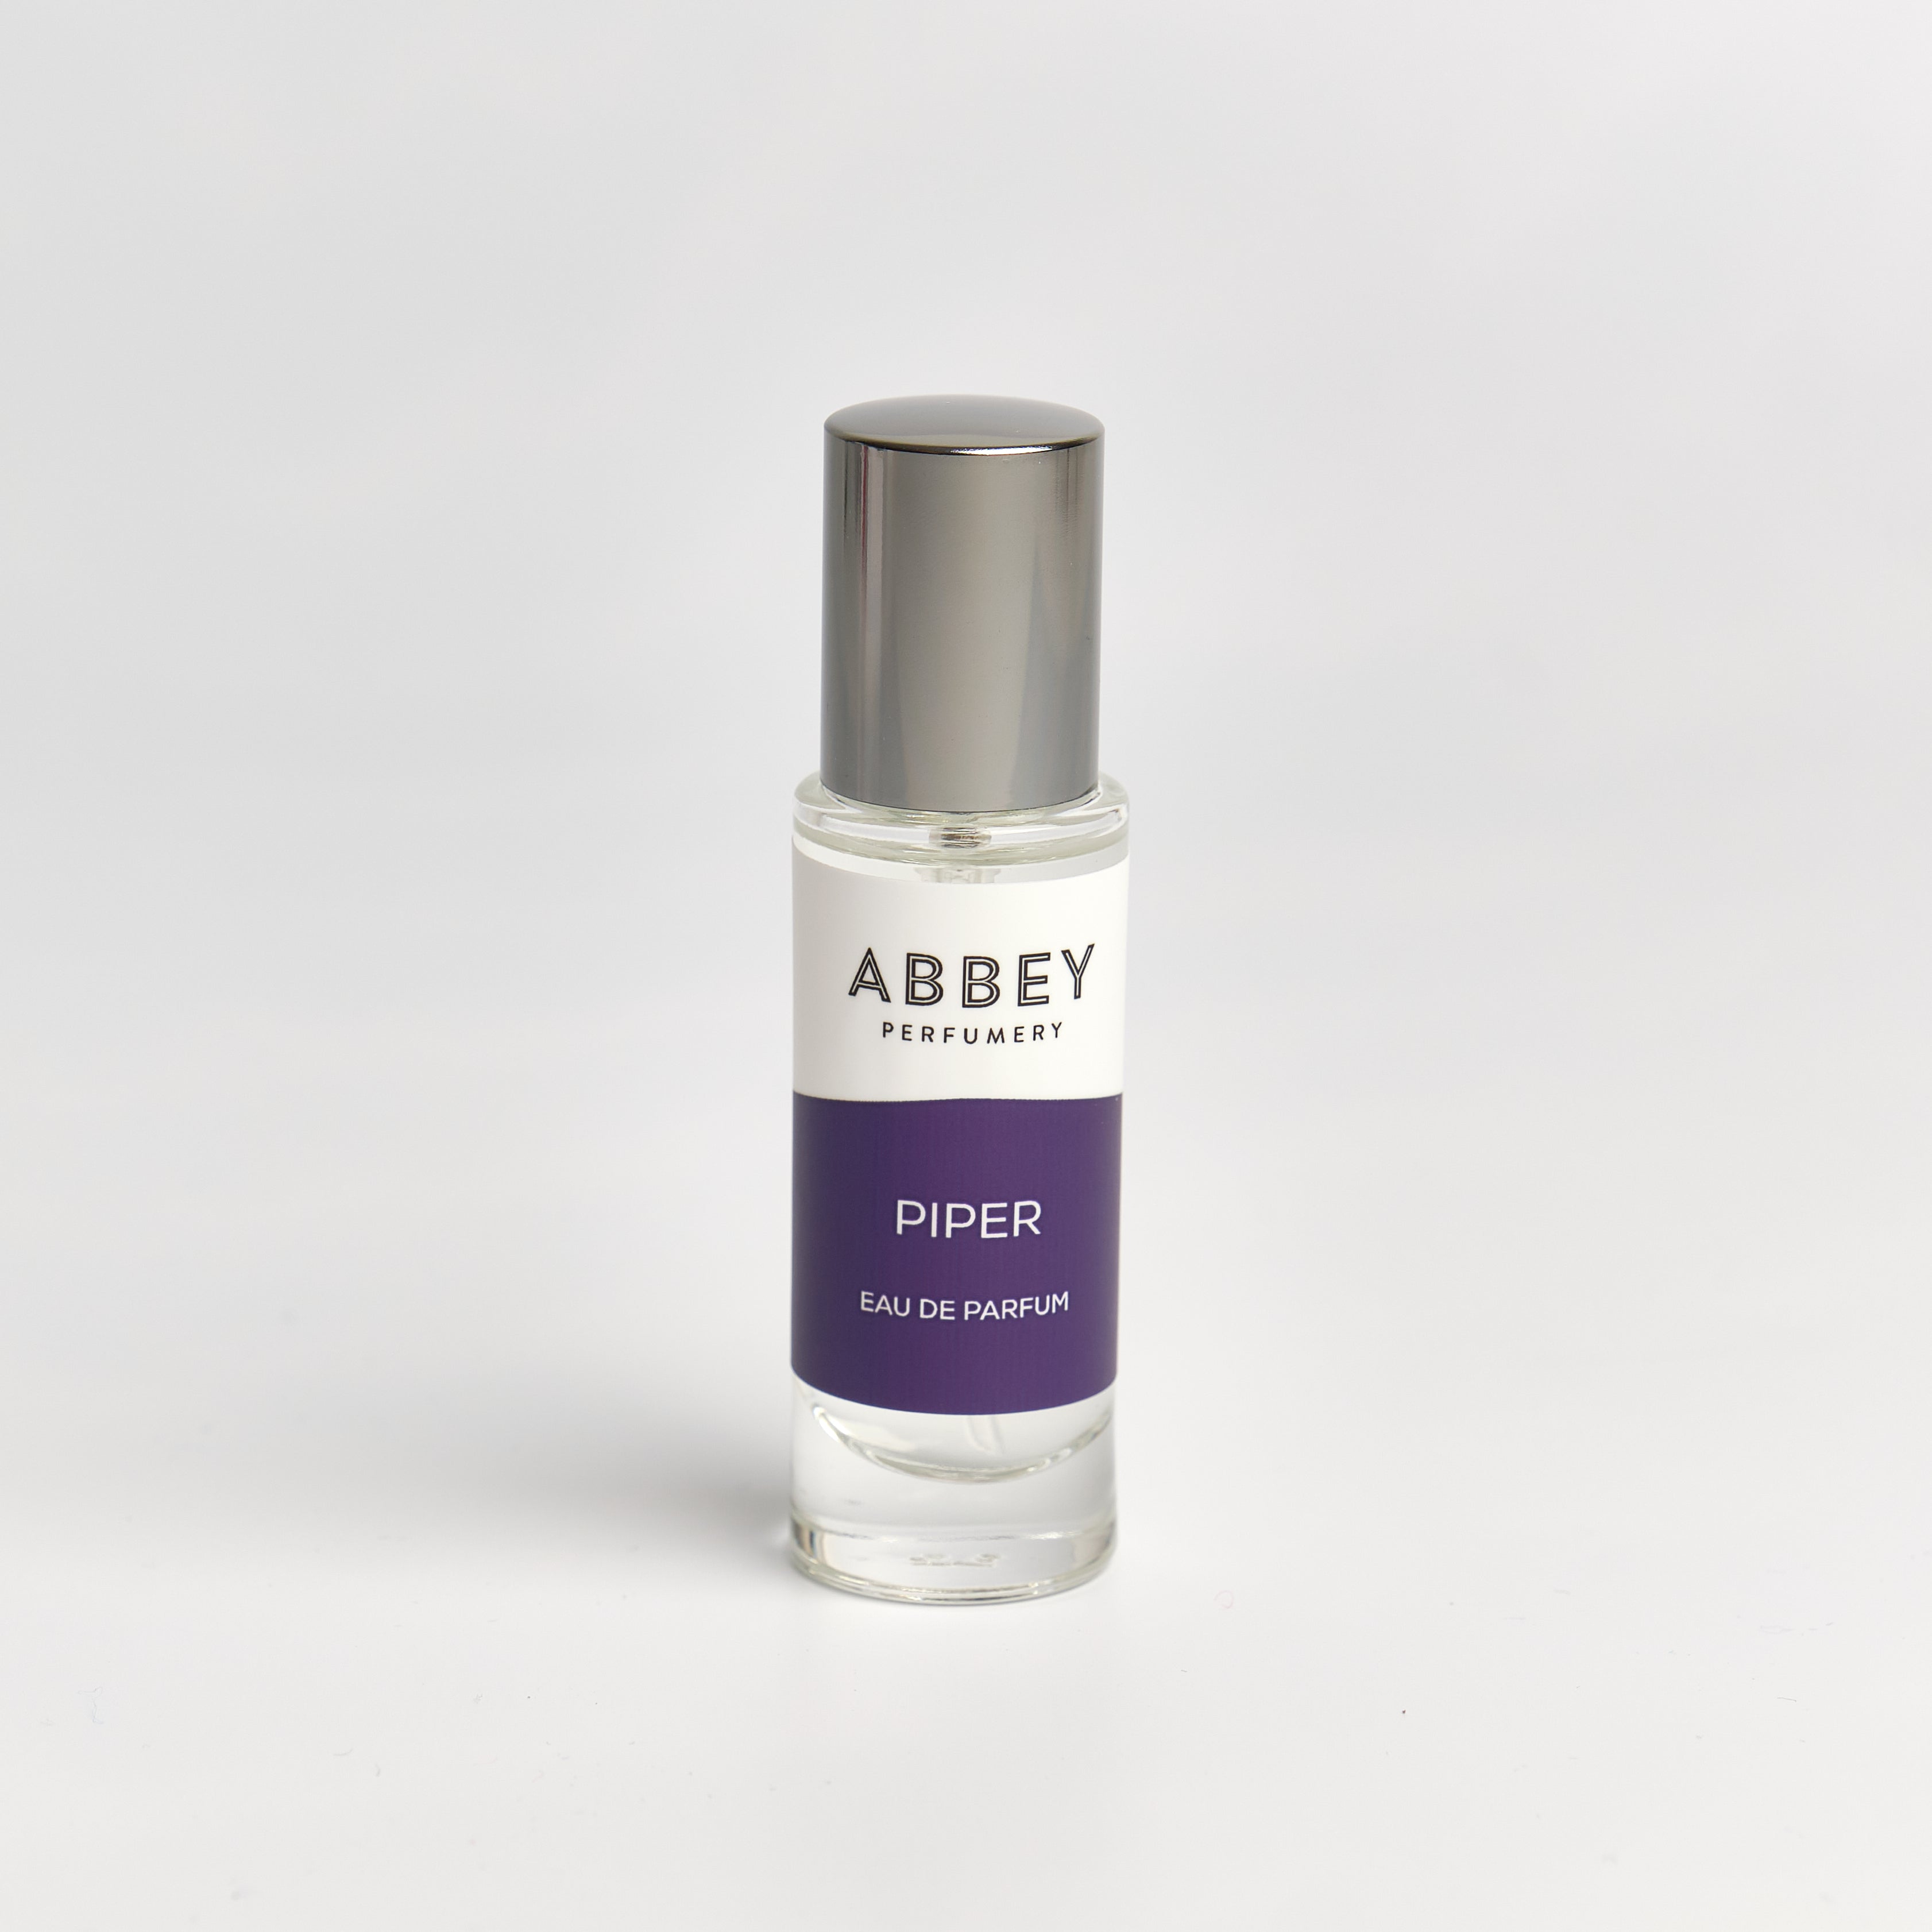 Piper perfume bottle 10ml on white background